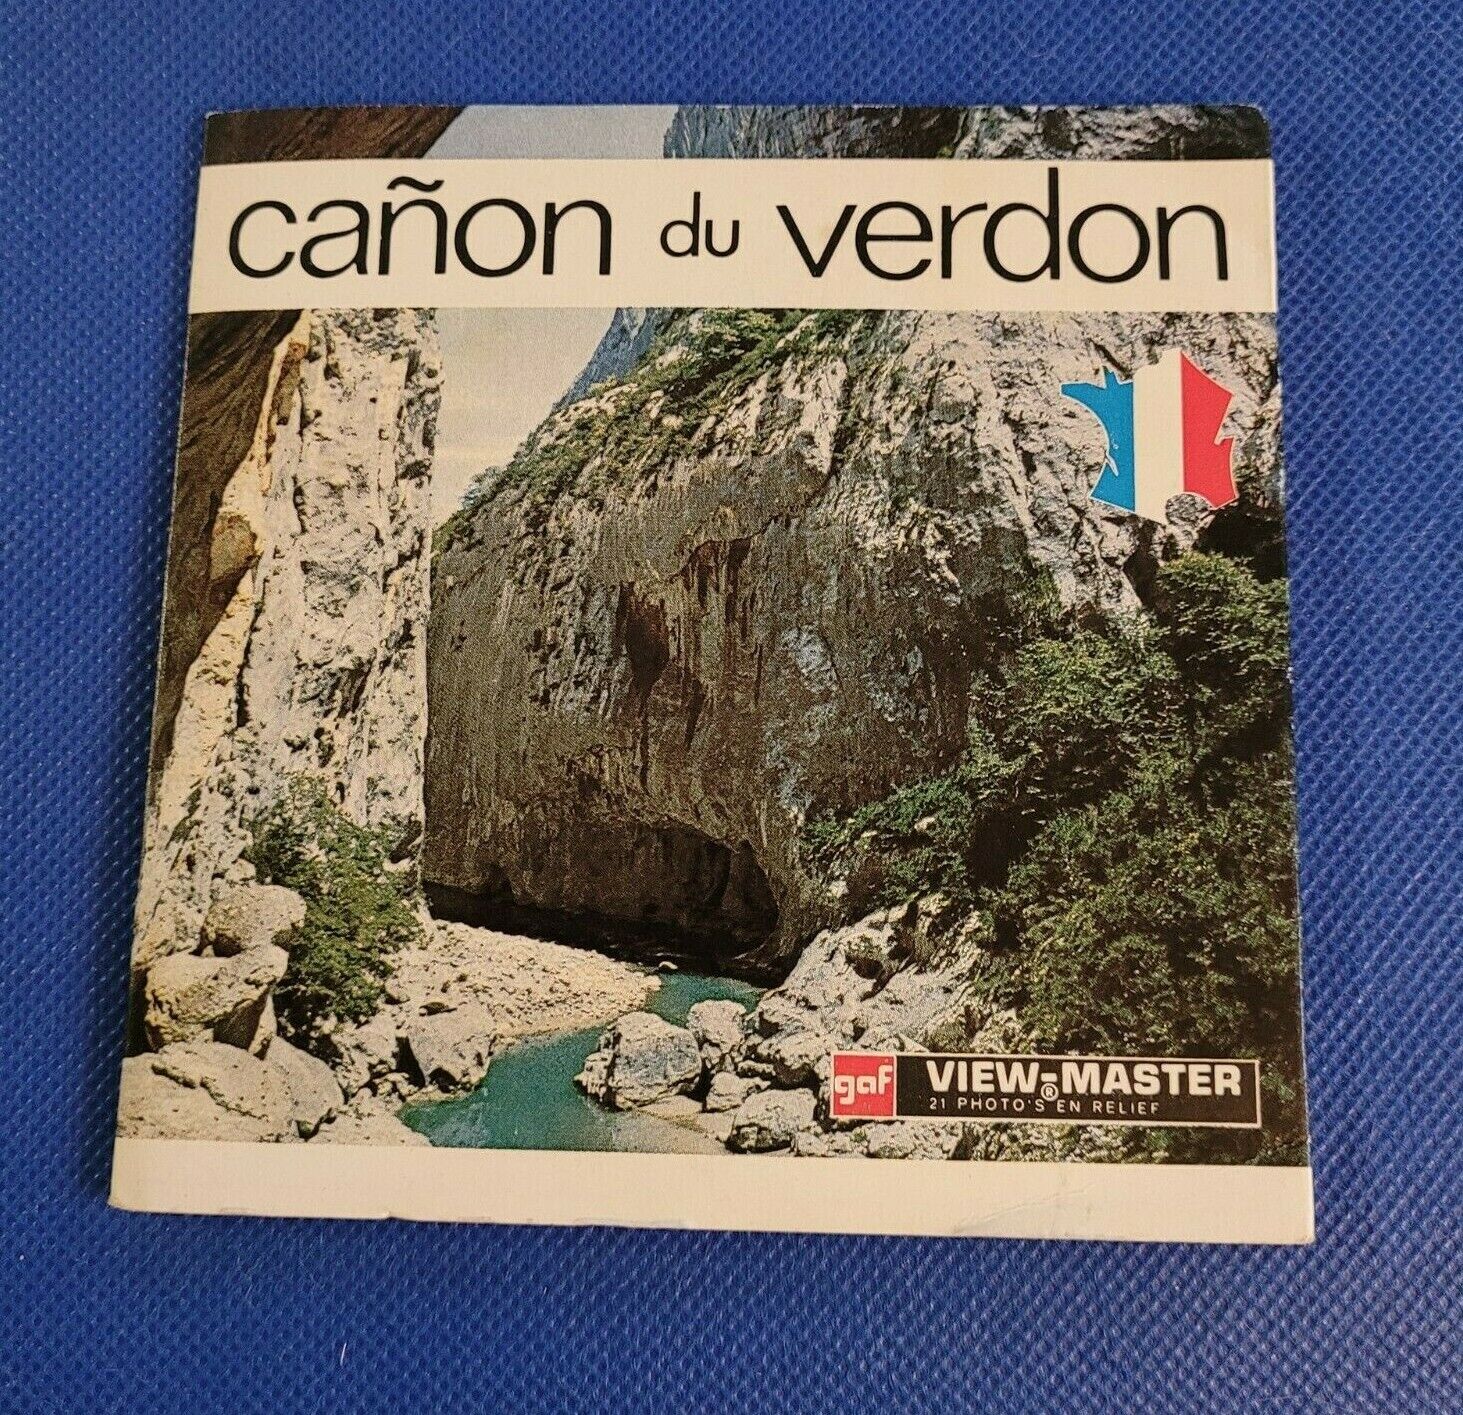 Rare Gaf C223 Canon du Verdon Canyon Gorge France view-master Reels Folder